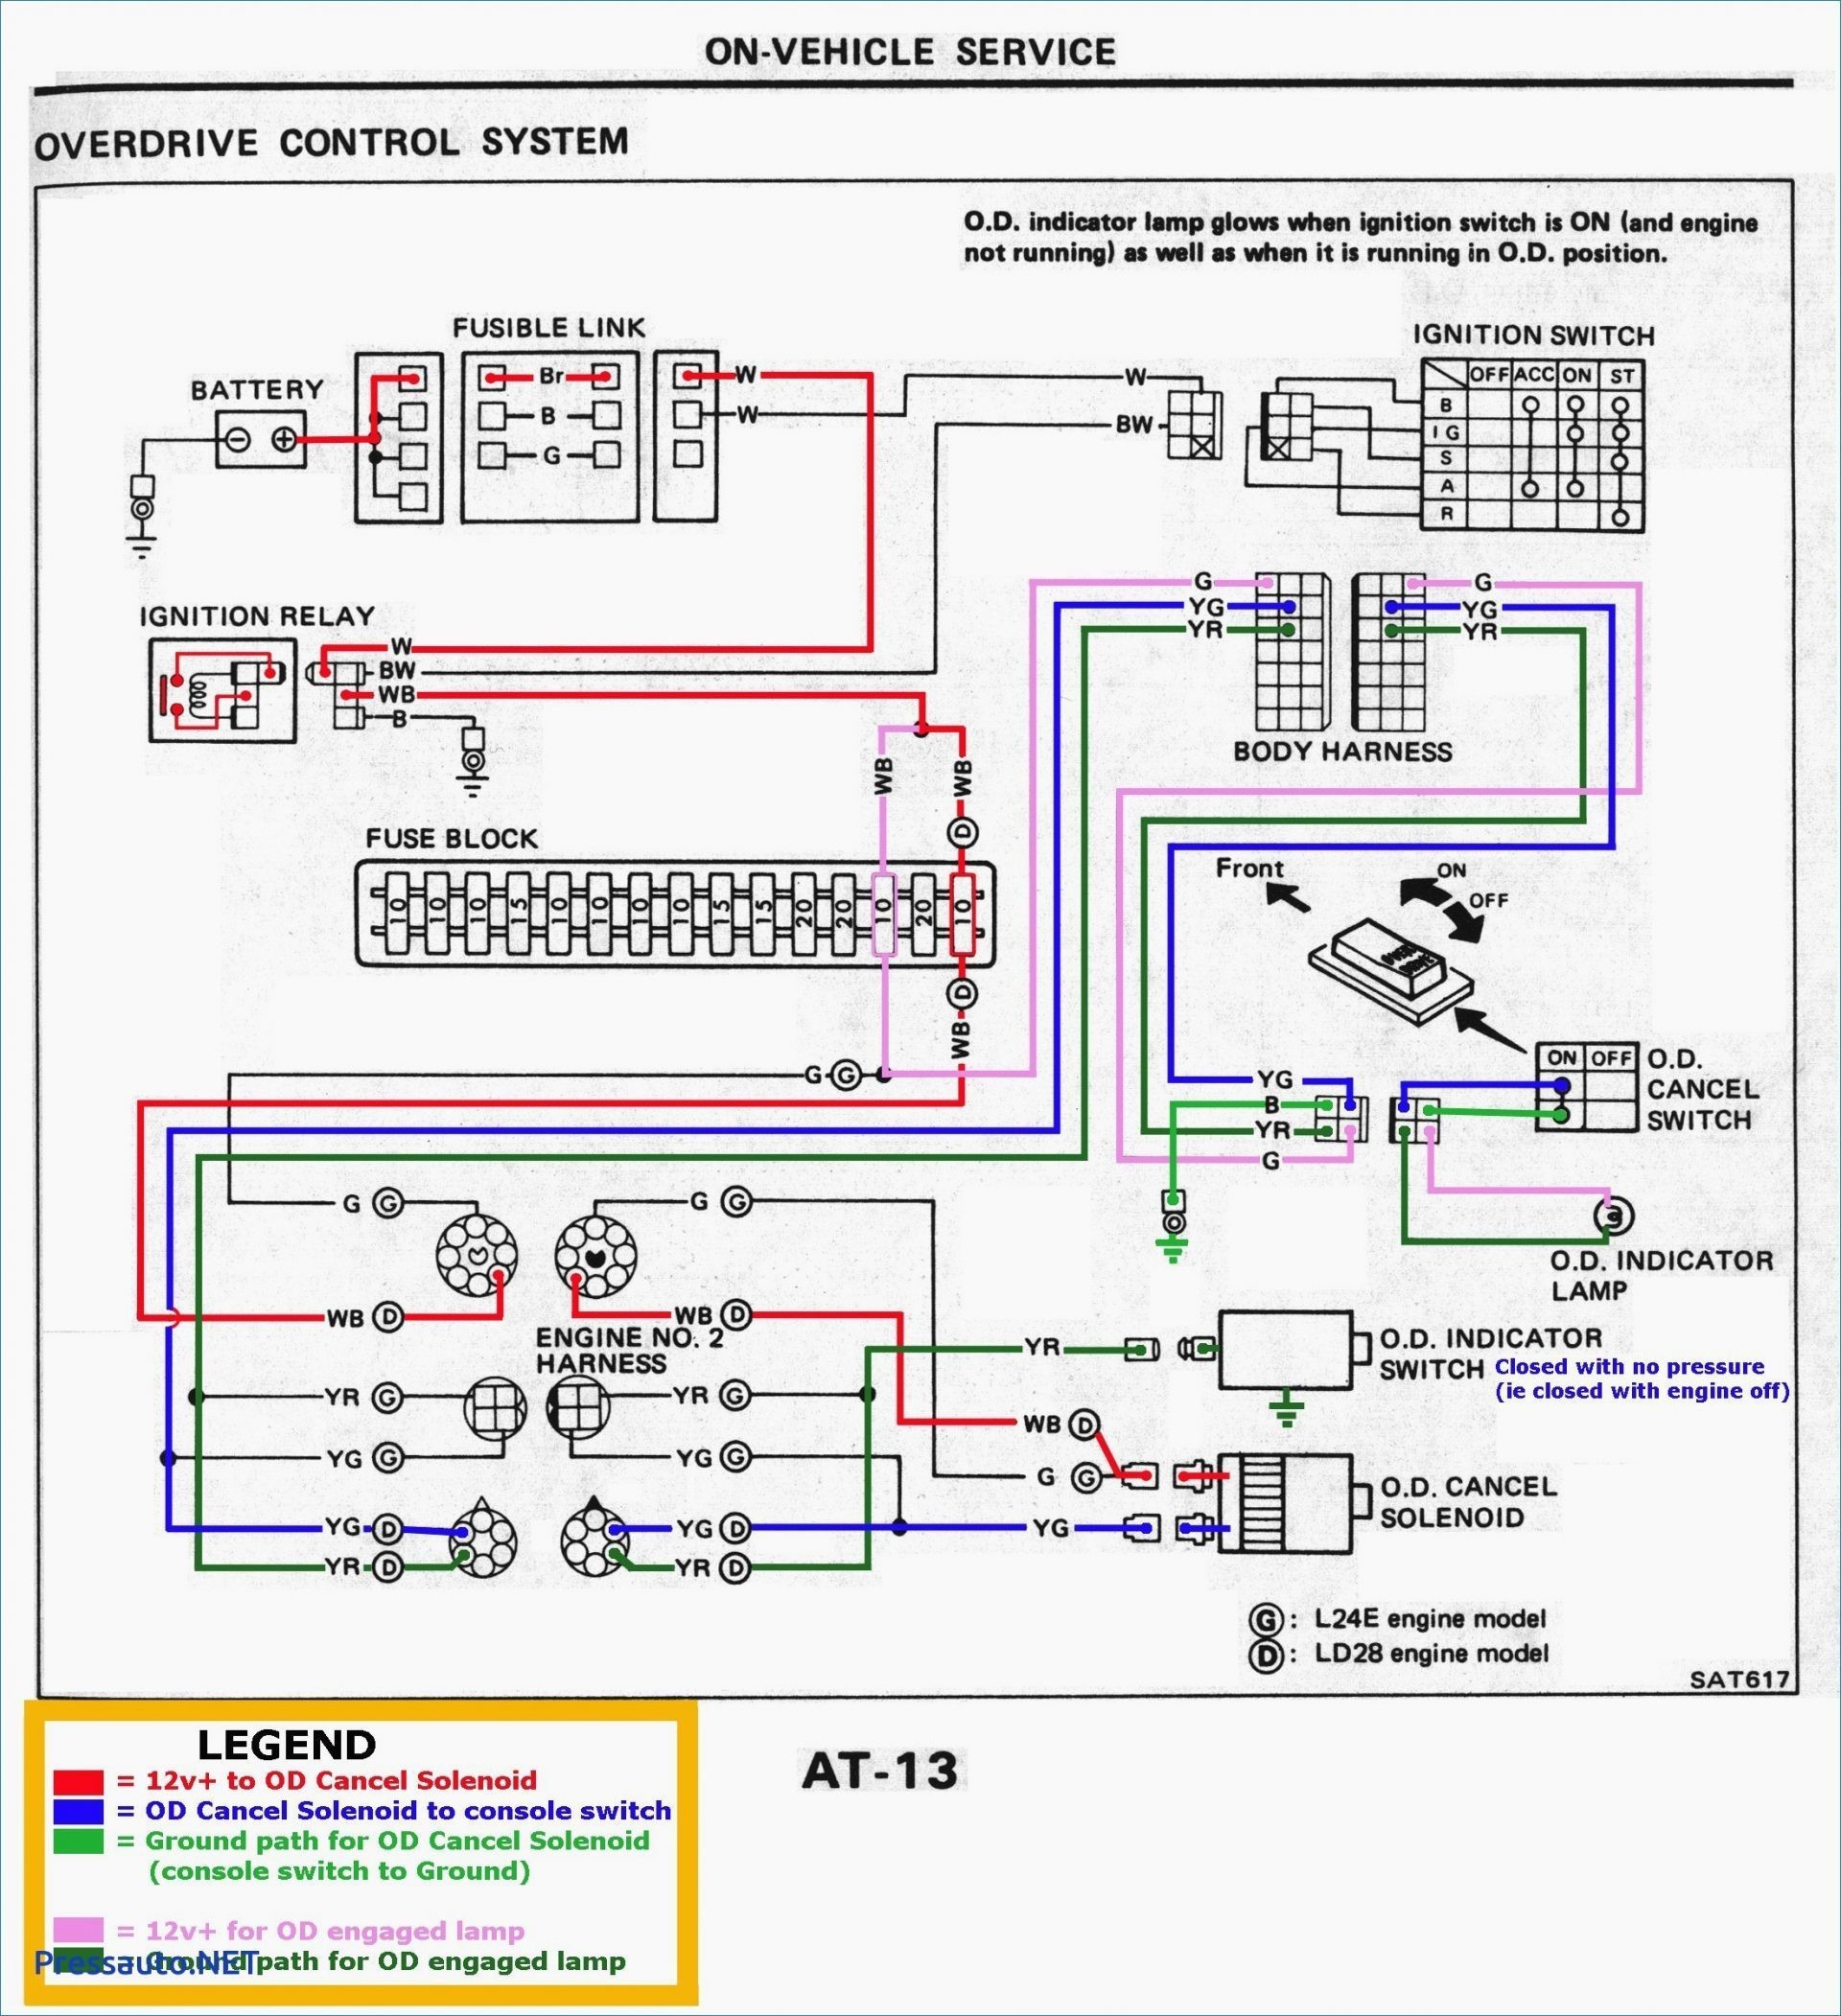 Suspension Components Diagram Collection Automotive Wiring Diagram Color Codes Download Of Suspension Components Diagram